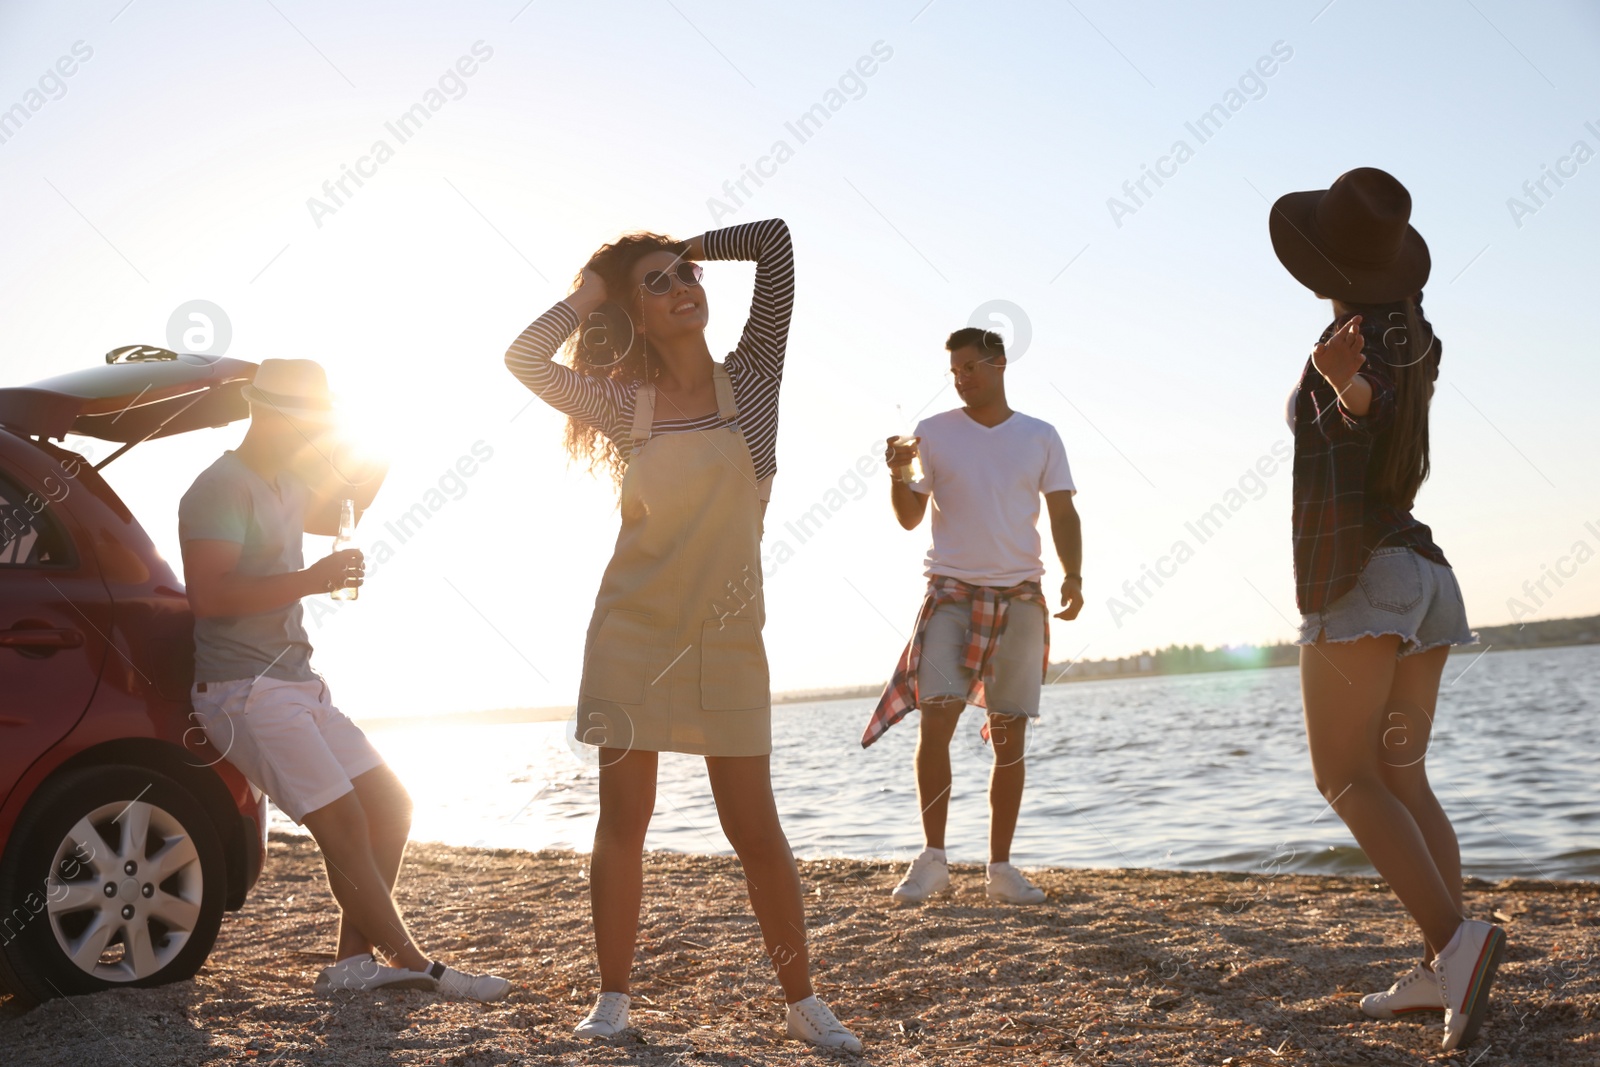 Photo of Happy friends having fun near car on beach. Summer trip